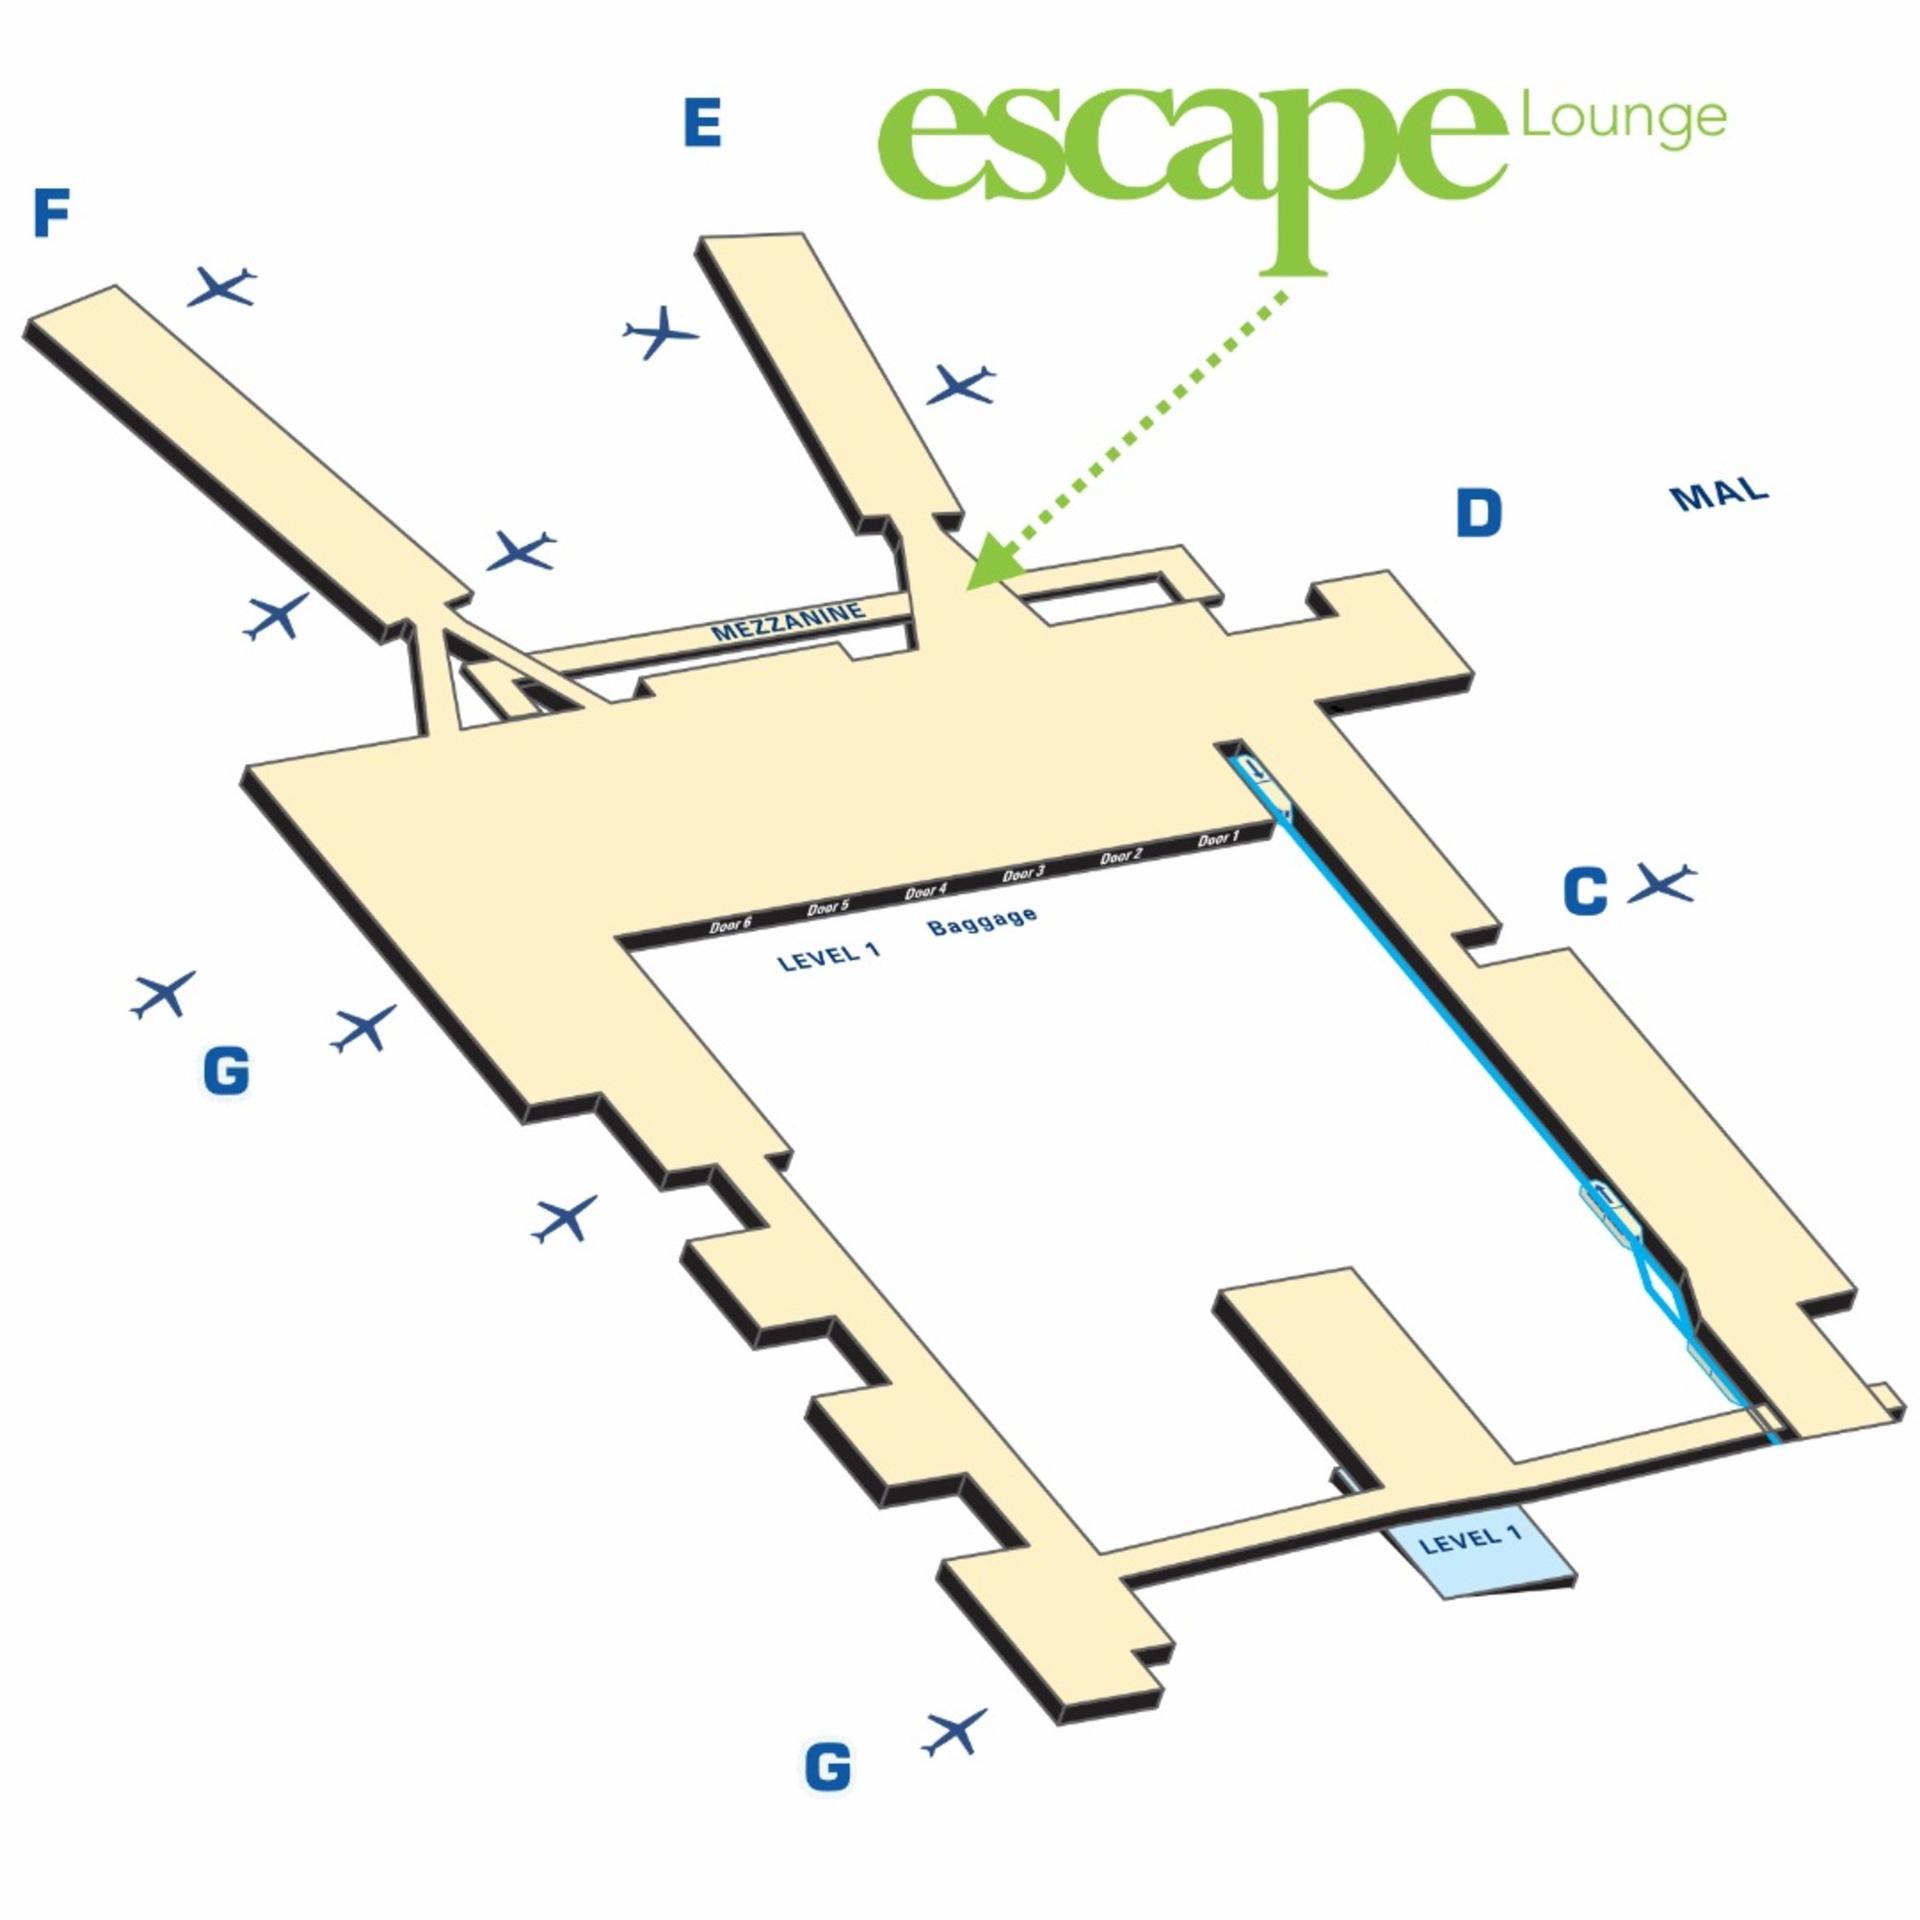 Escape Lounge- The Centurion® Studio Partner image 25 of 51